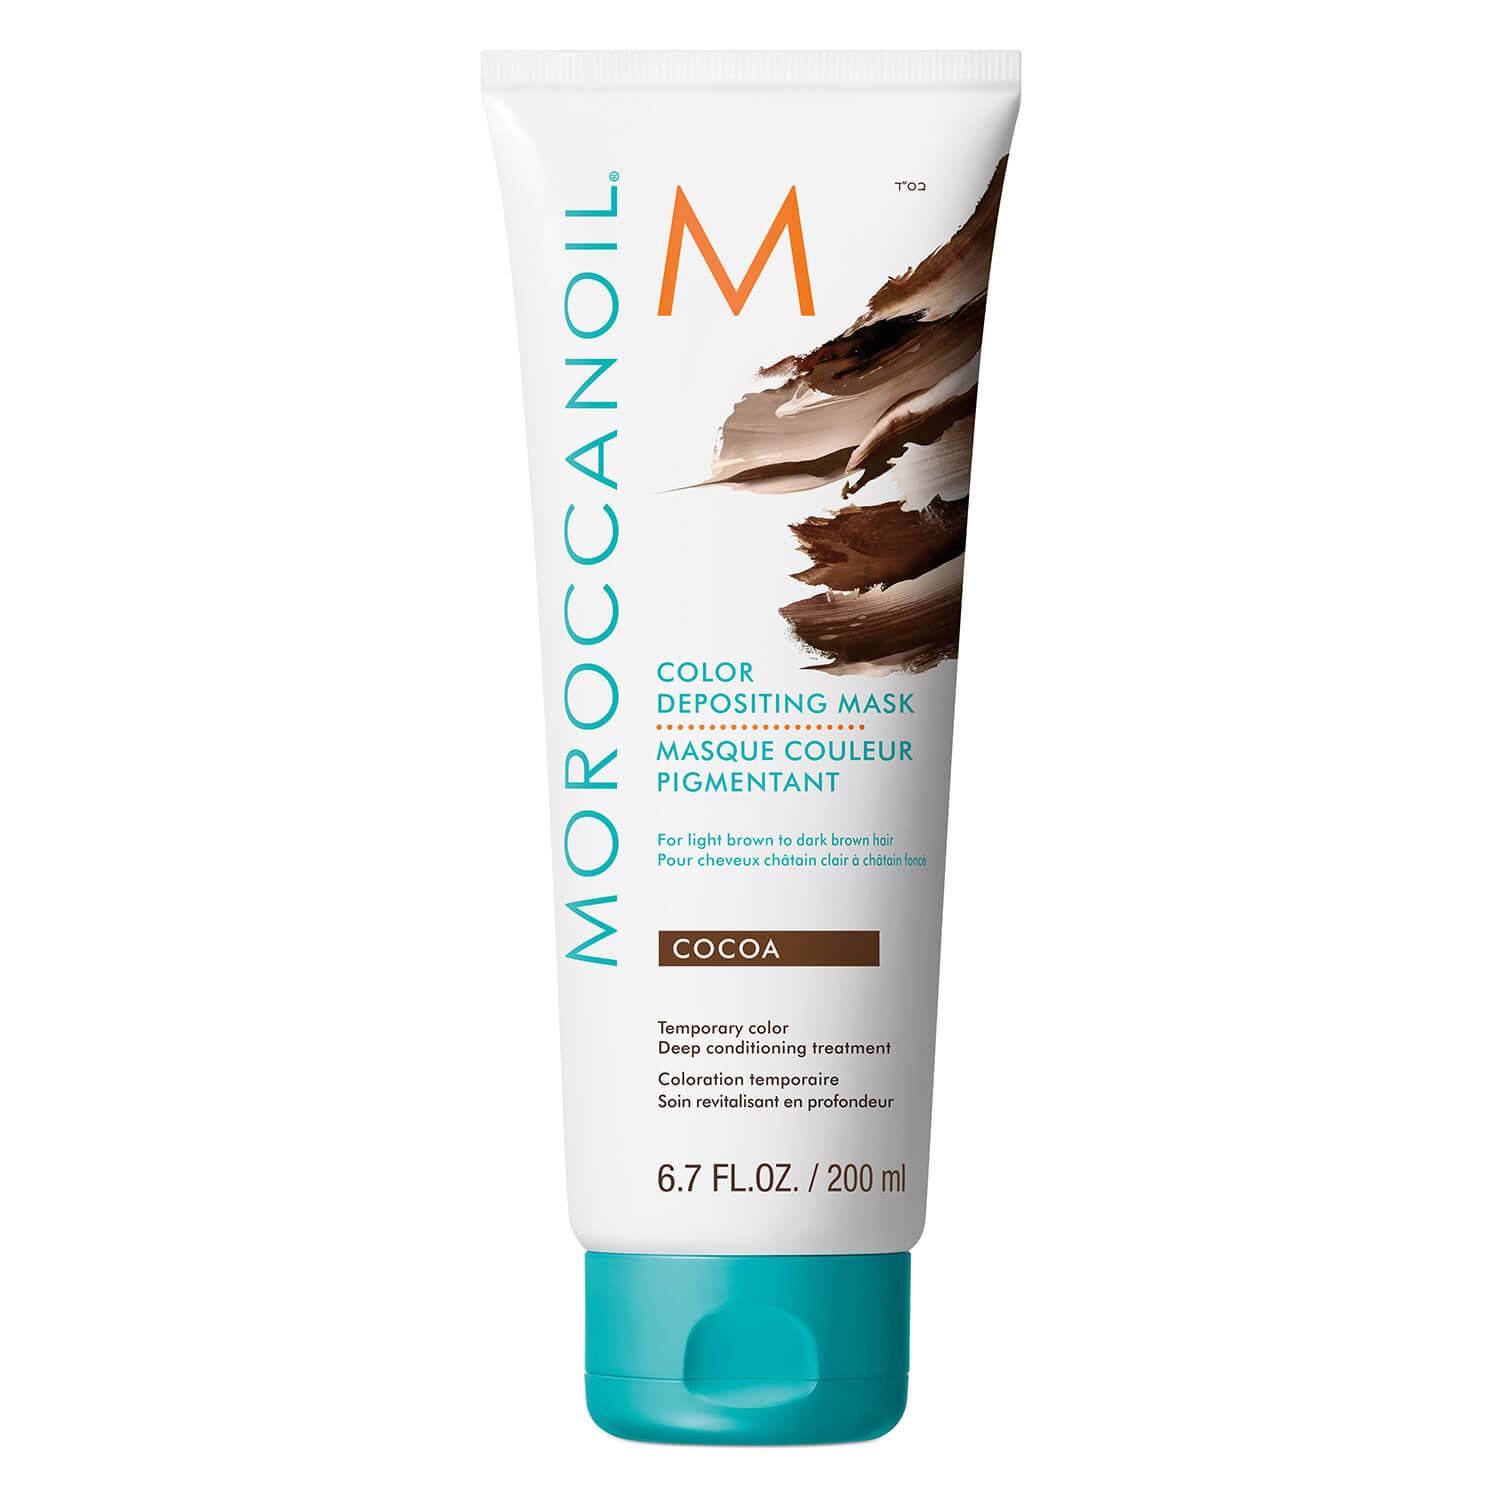 Moroccanoil - Masque Couleur Pigmentant Cocoa